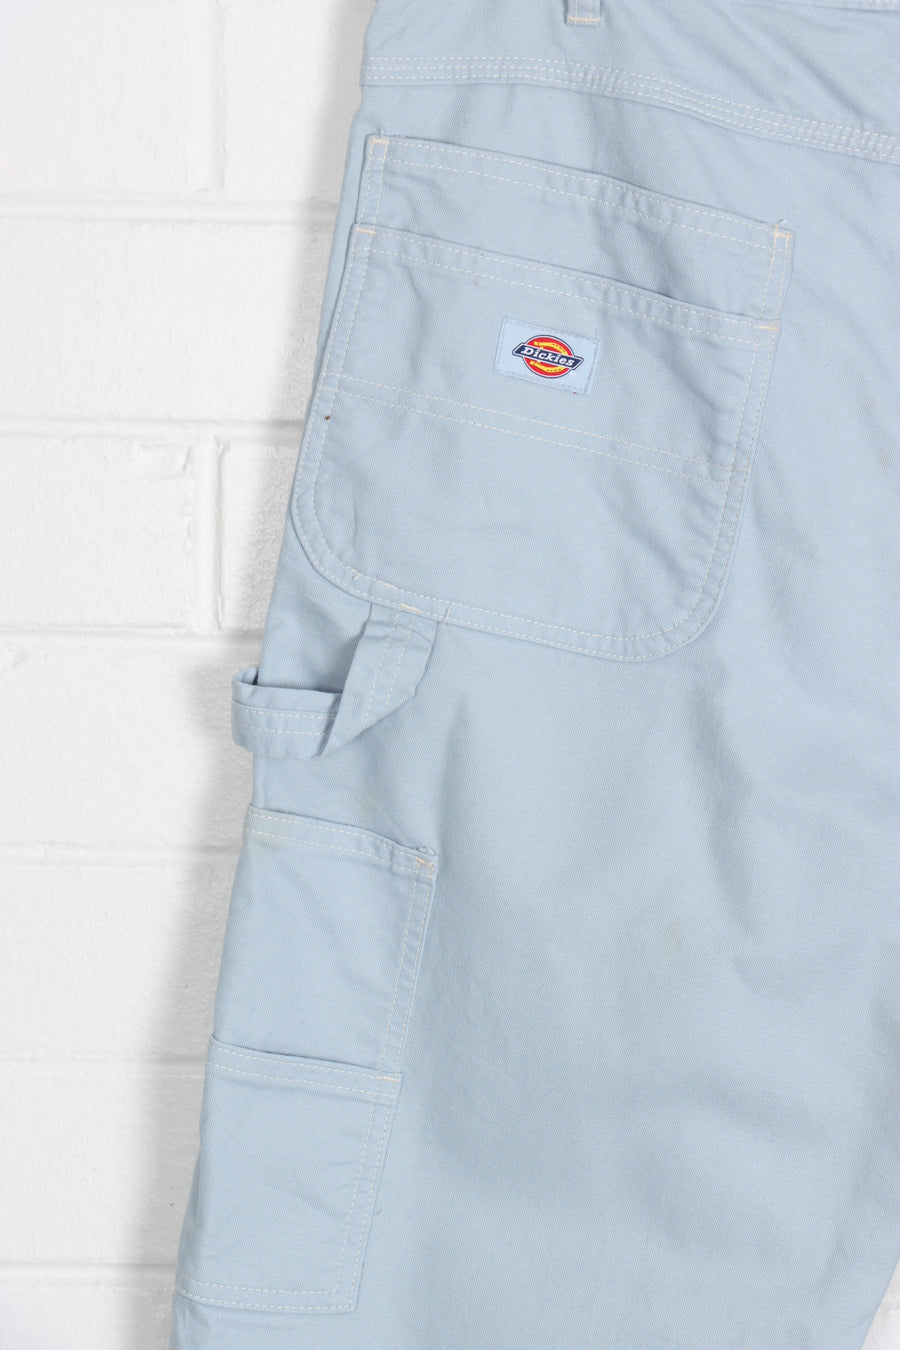 DICKIES Baby Blue Carpenter Pants (34x32)